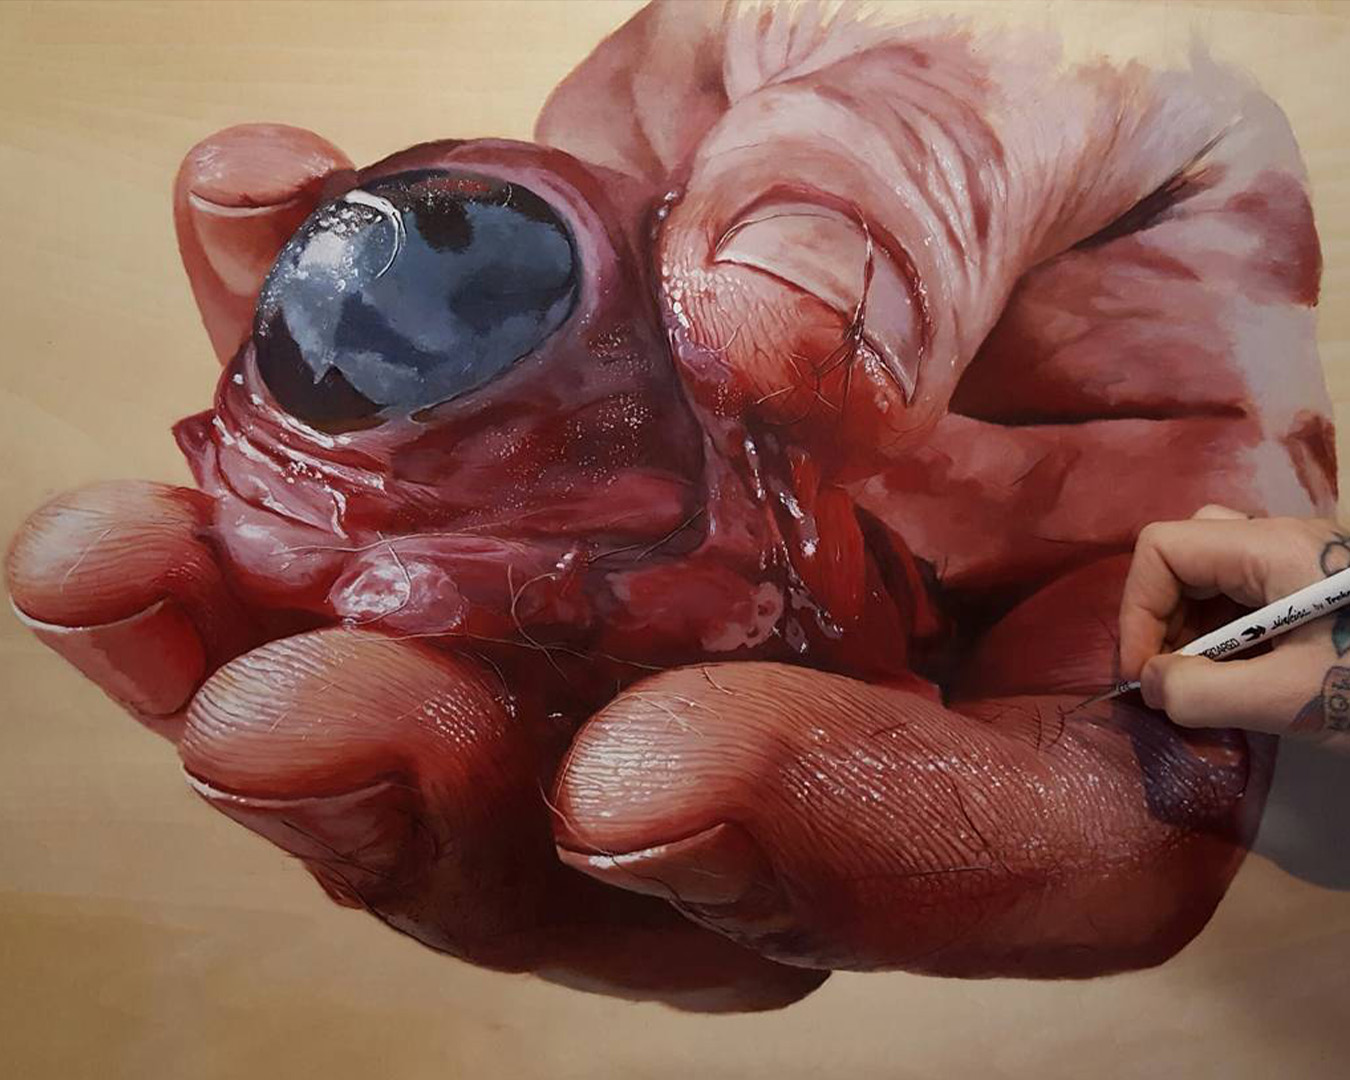 hyper realistic acrylic painting of a hand holding an animal eyeball